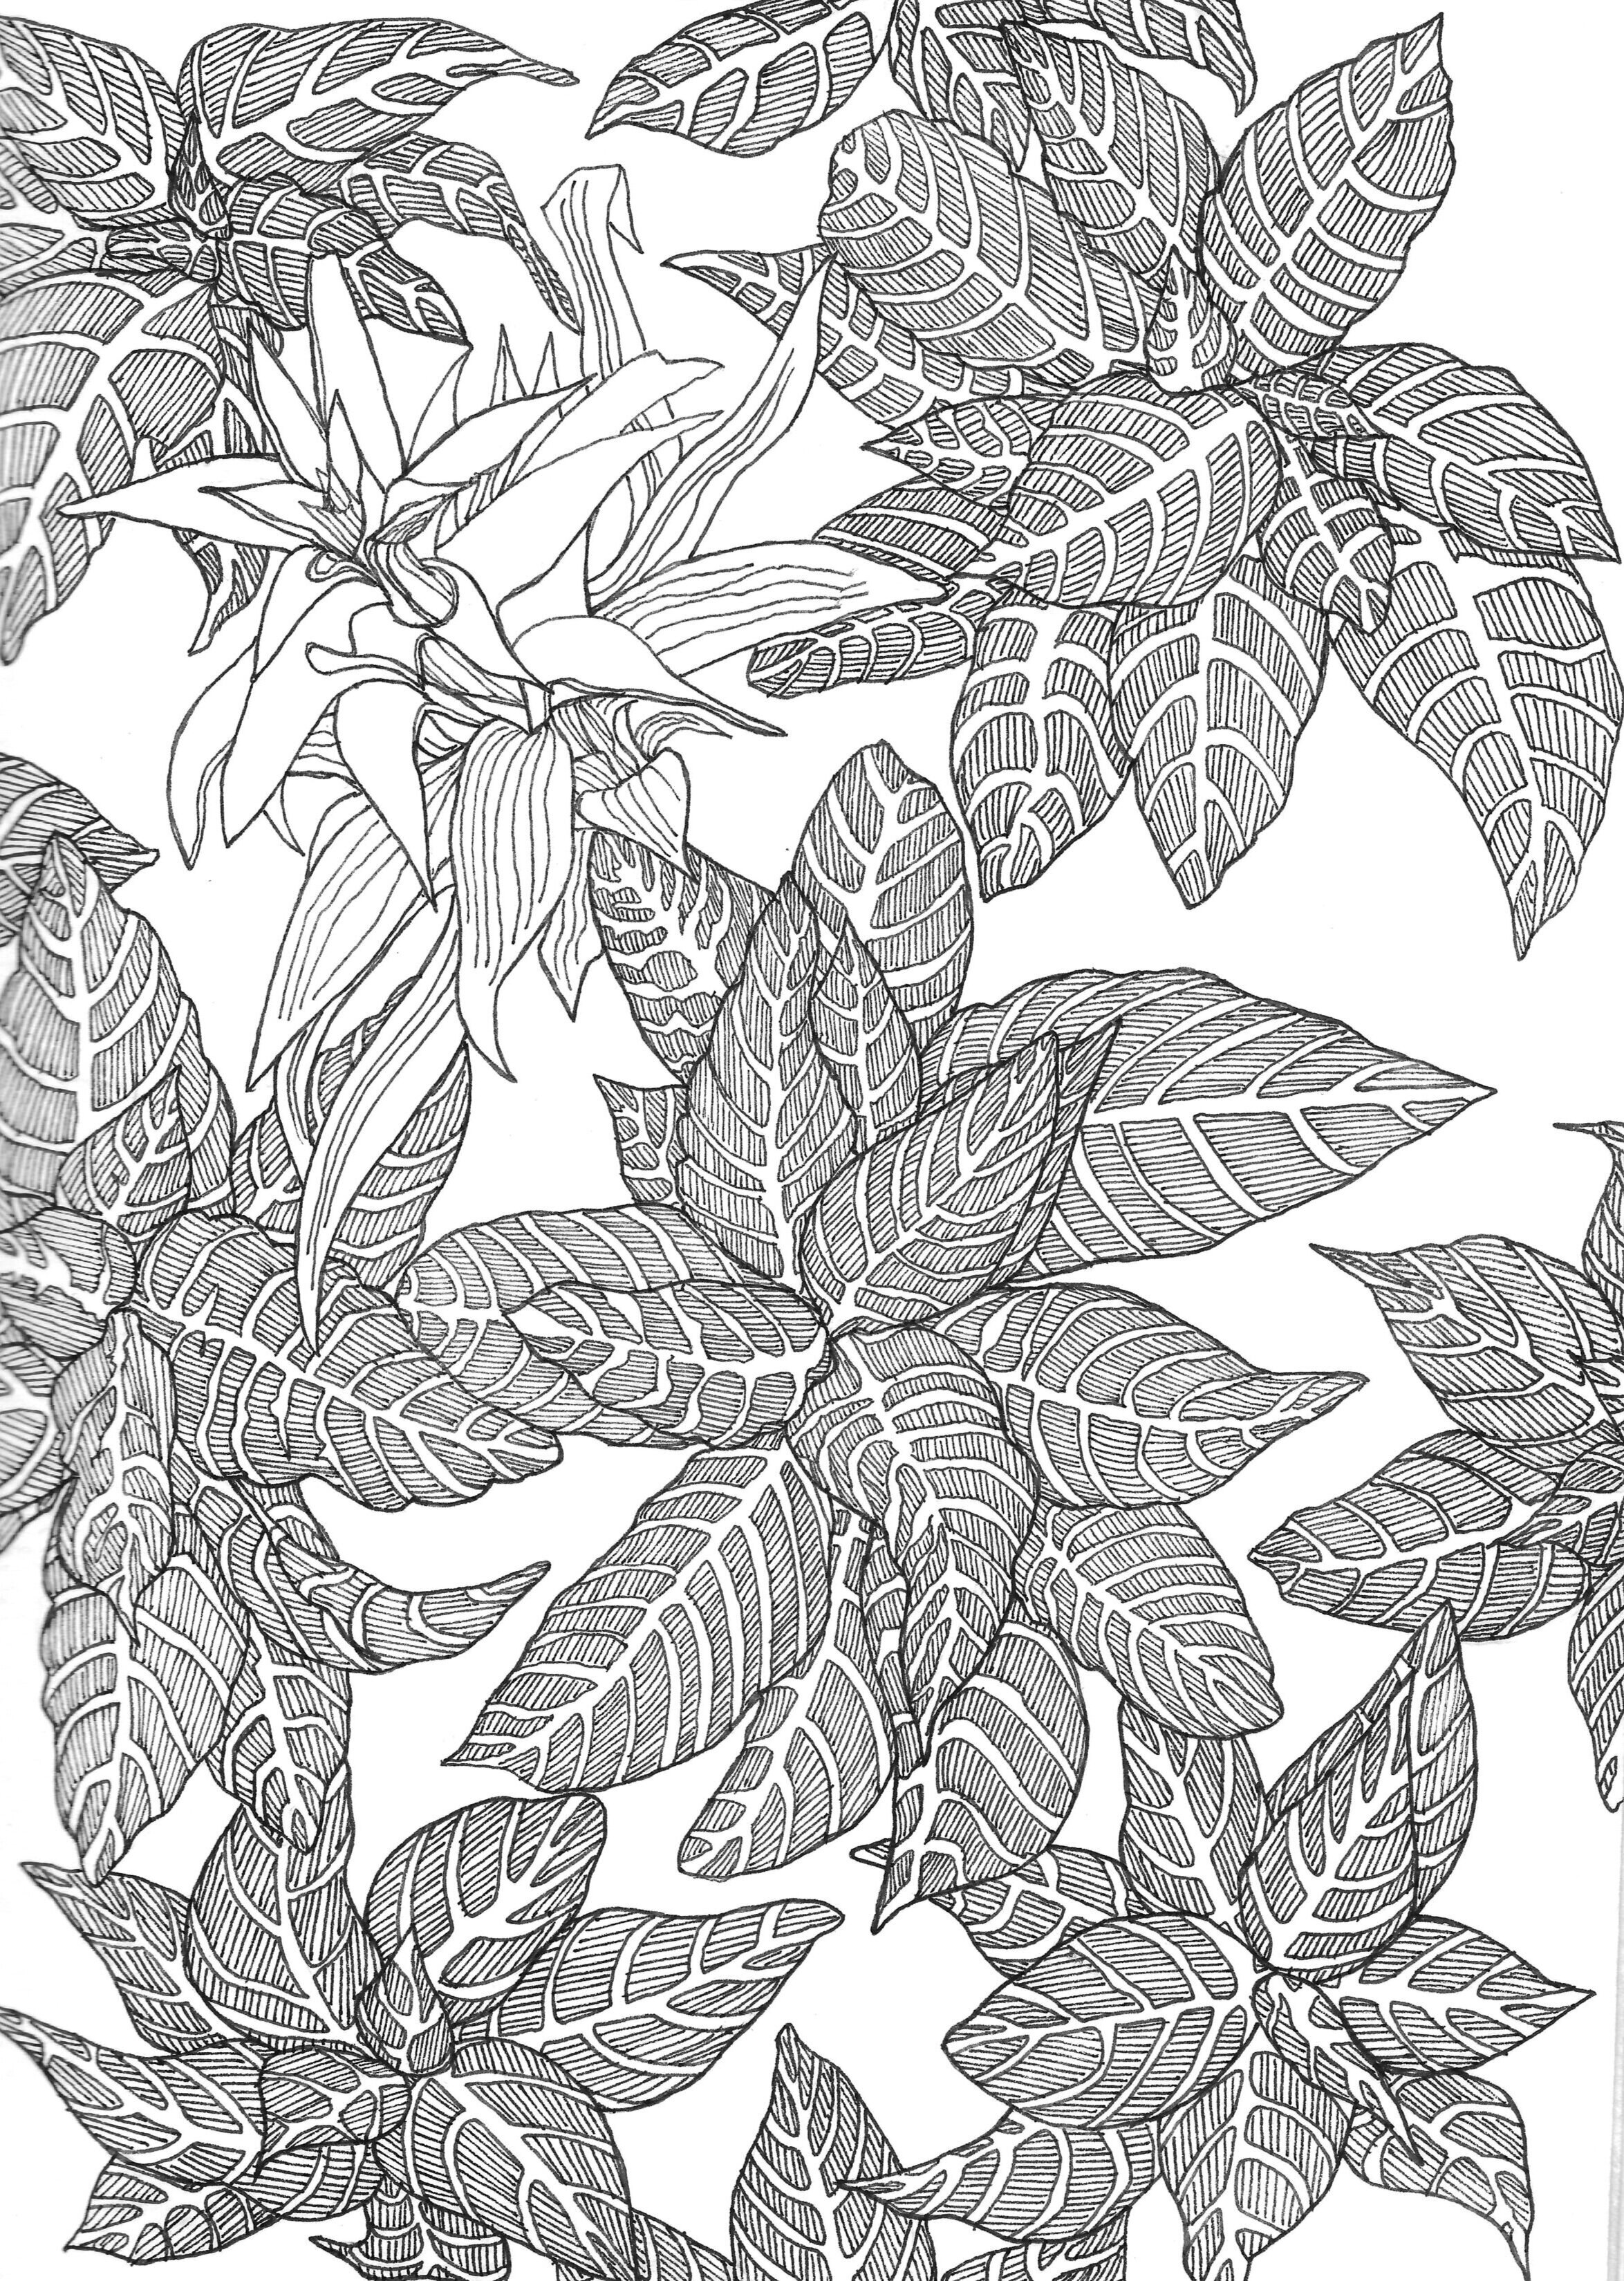   Aphelandra squarrosa (Zebra plant),  Ink Pen on Paper, 8 x 10”, 2019 